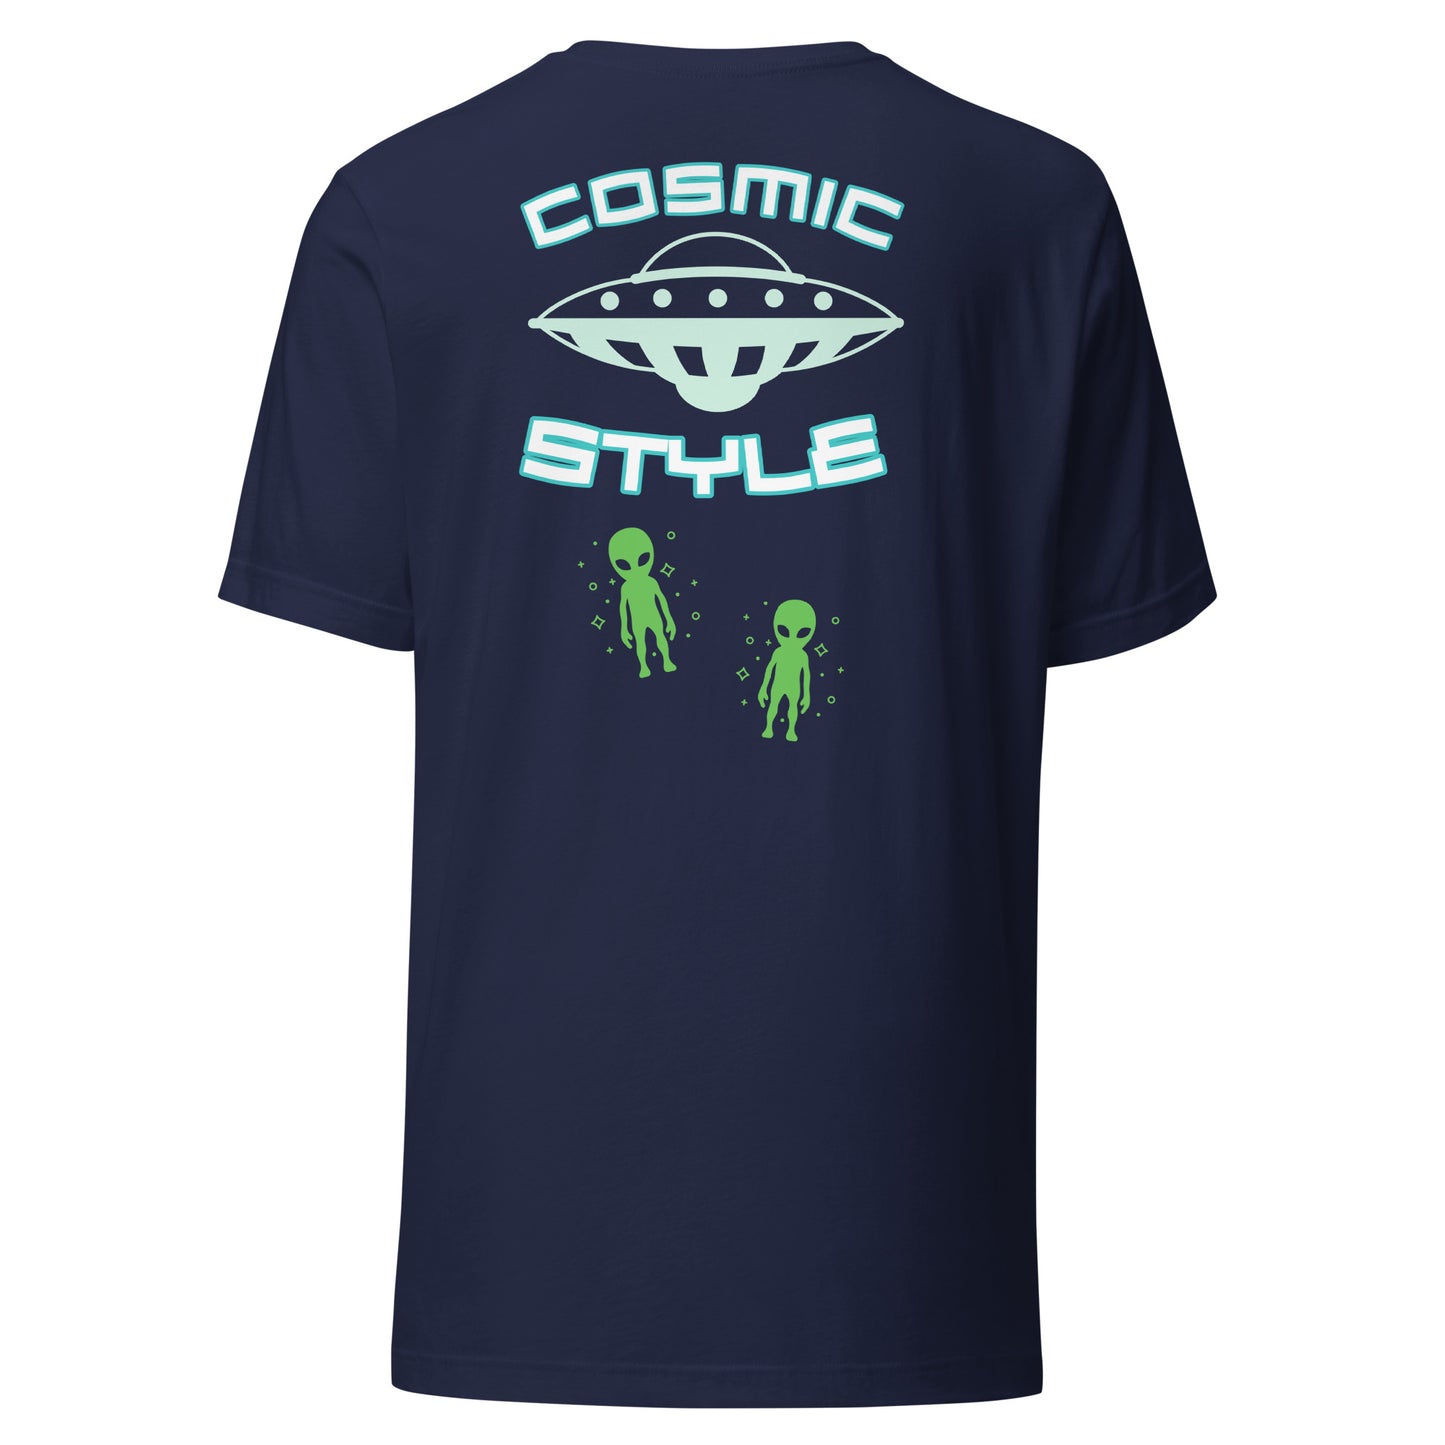 Cosmic Style t-shirt